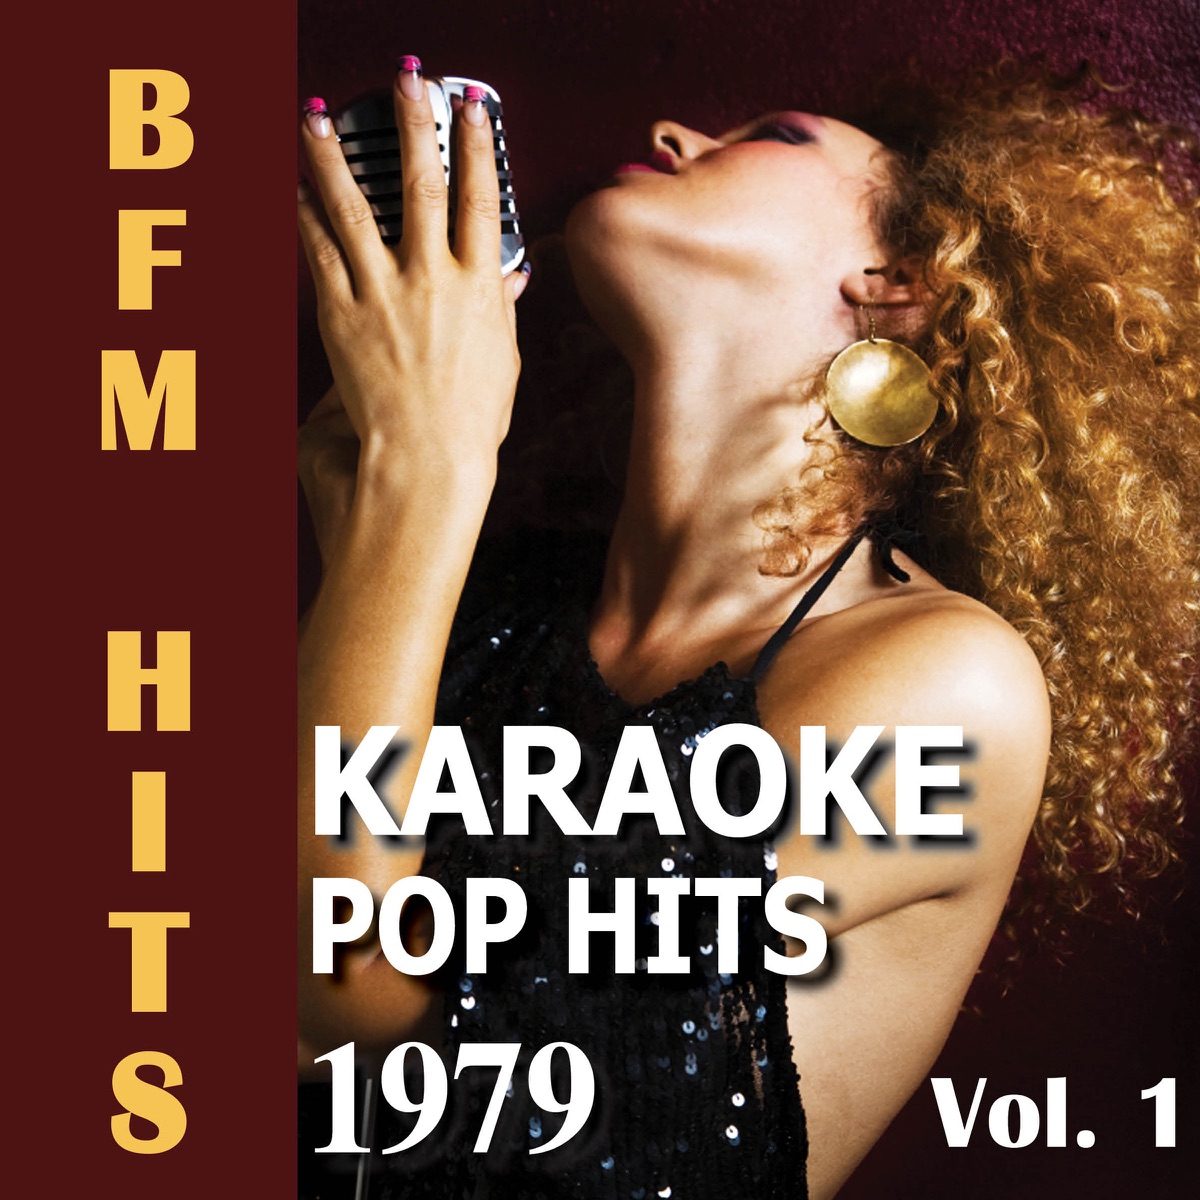 Karaoke: Pop Hits 1979, Vol. 1 by BFM Hits on Apple Music